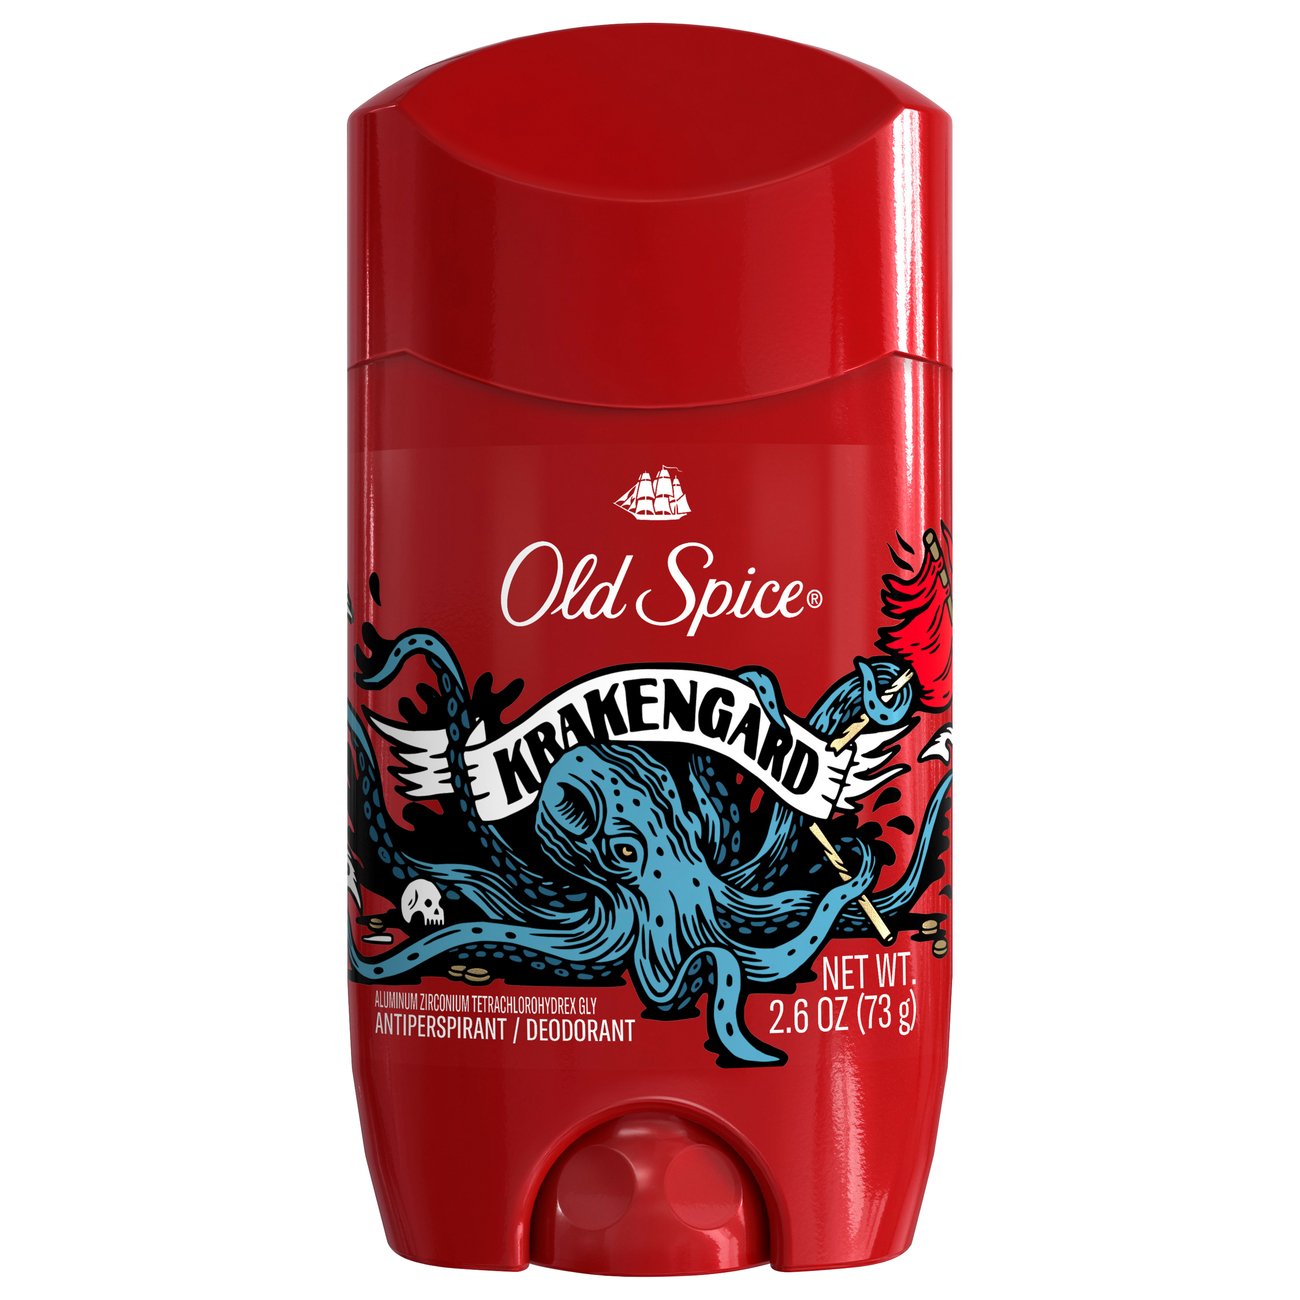 Old Spice Wild Collection Anti Perspirant Deodorant For Men Krakengard Shop Deodorant